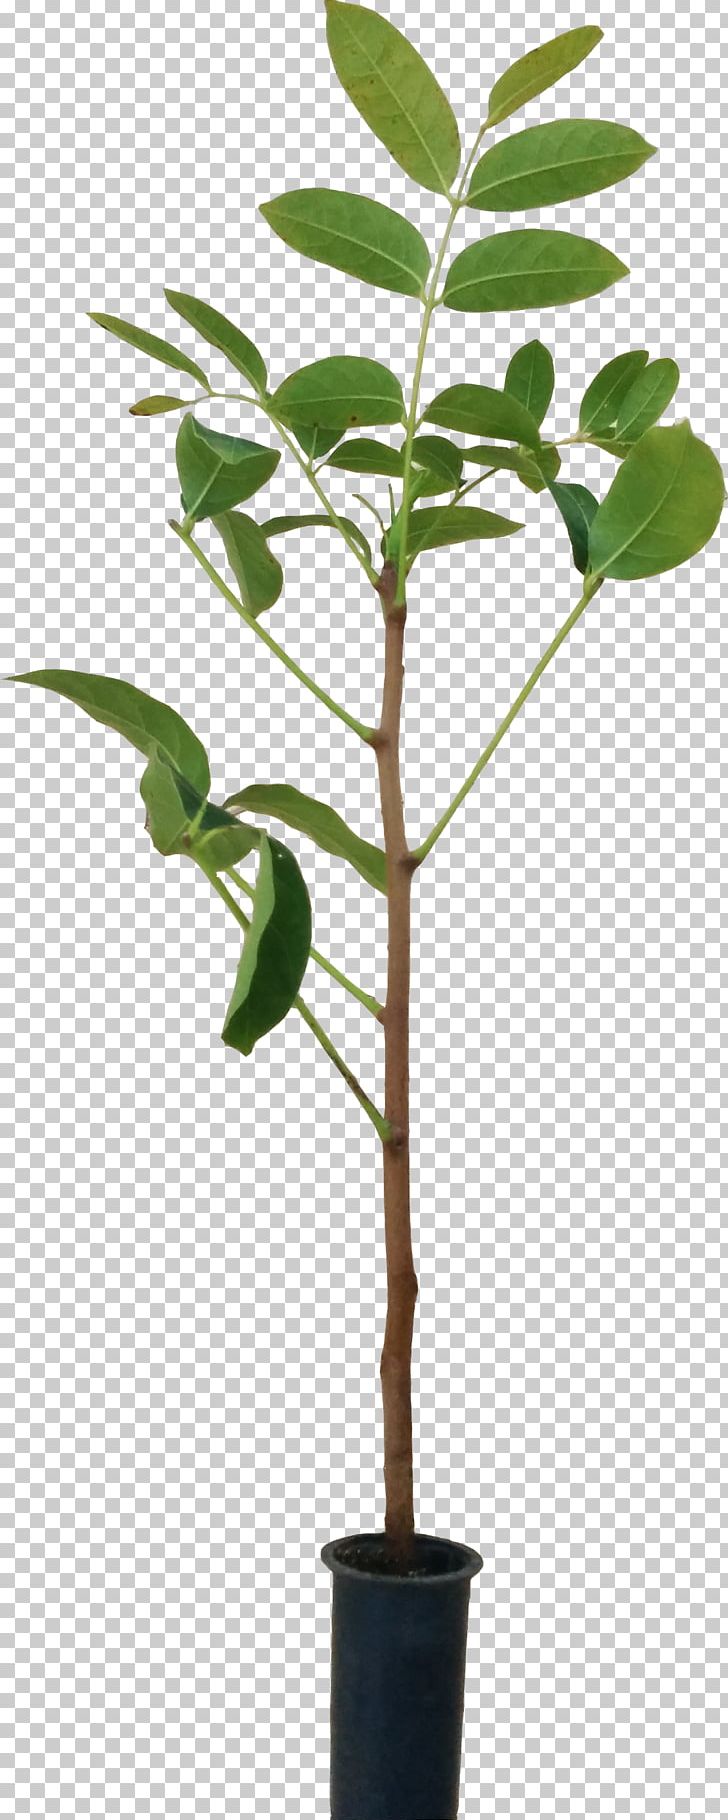 Flowerpot Houseplant Plant Stem Leaf Branching PNG, Clipart, Branch, Branching, Flowerpot, Houseplant, Leaf Free PNG Download